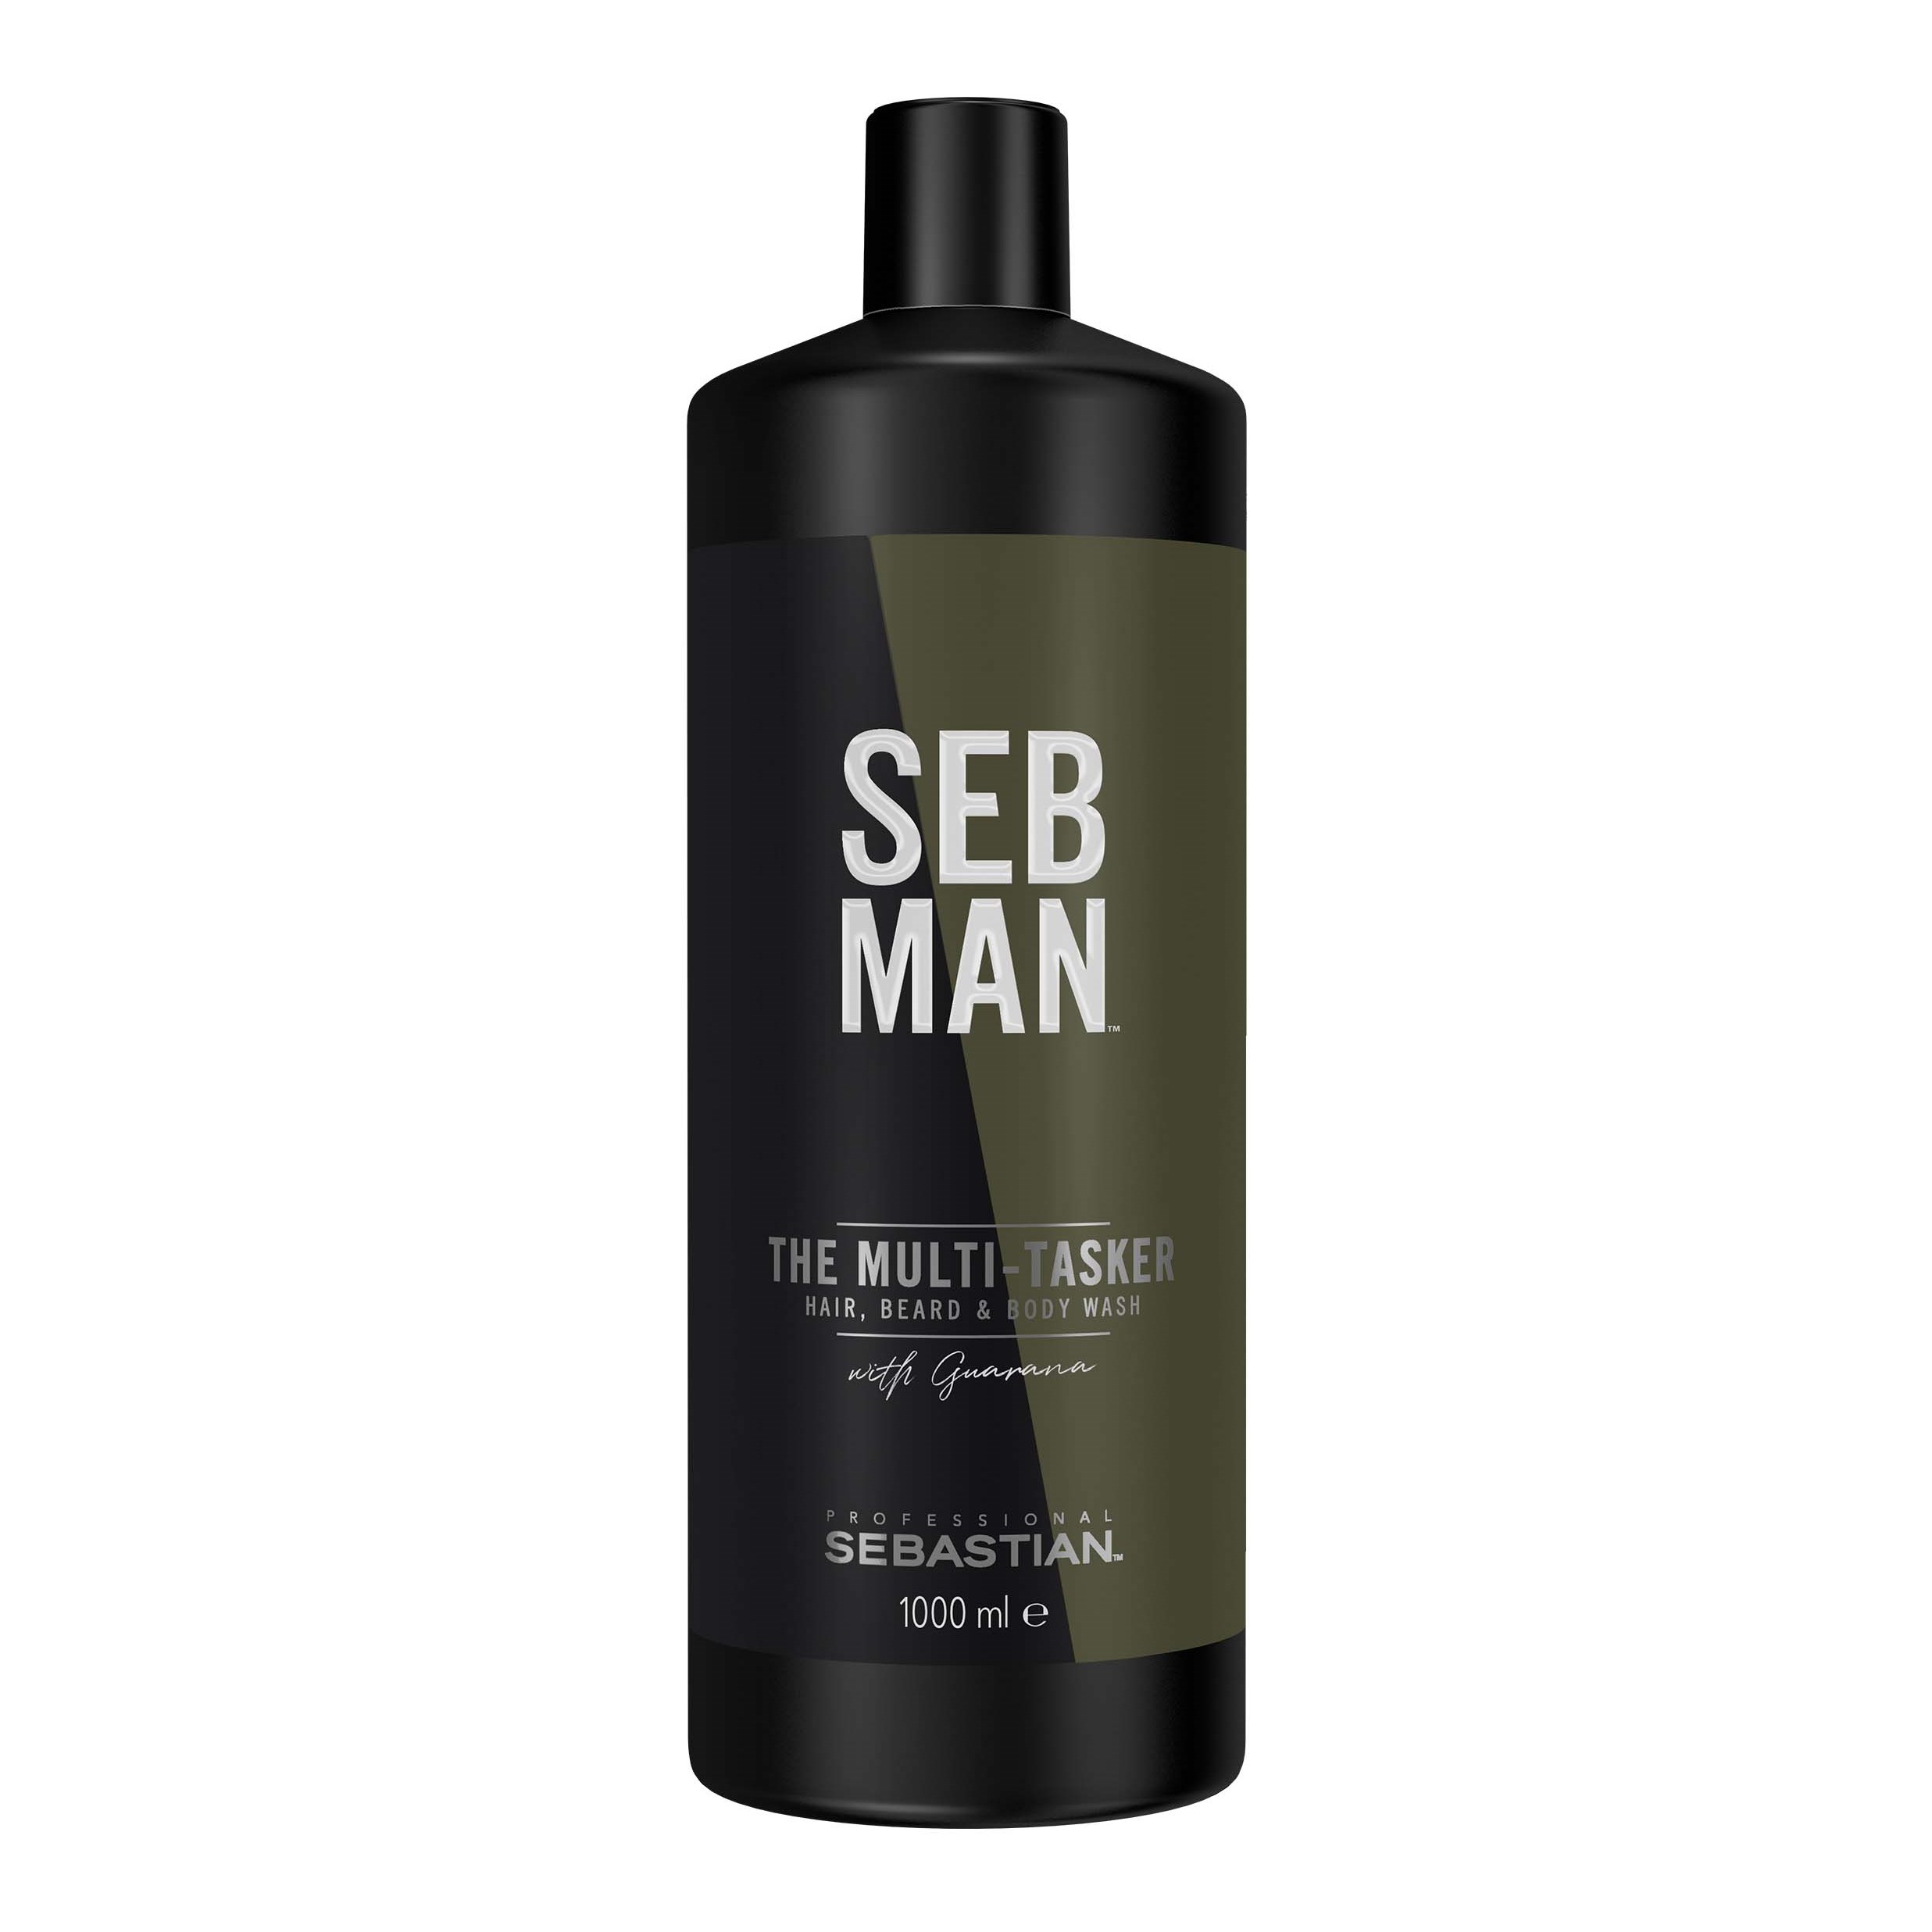 SEB MAN The Multi-tasker Hair Beard & Body Wash 1000 ml